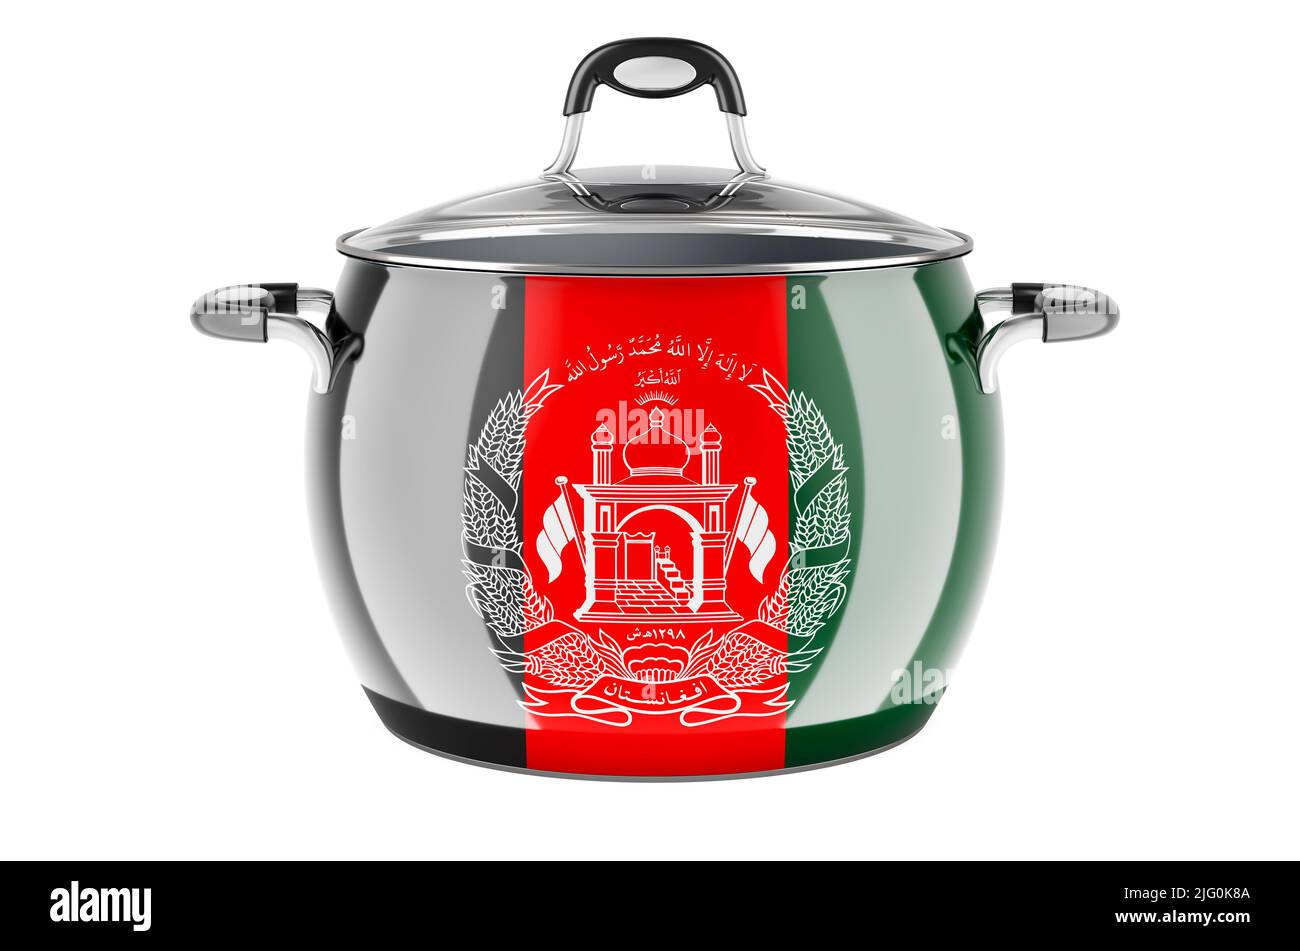 Afghan Cauldron Kazan Traditional Pressure Cooker Stock Photo